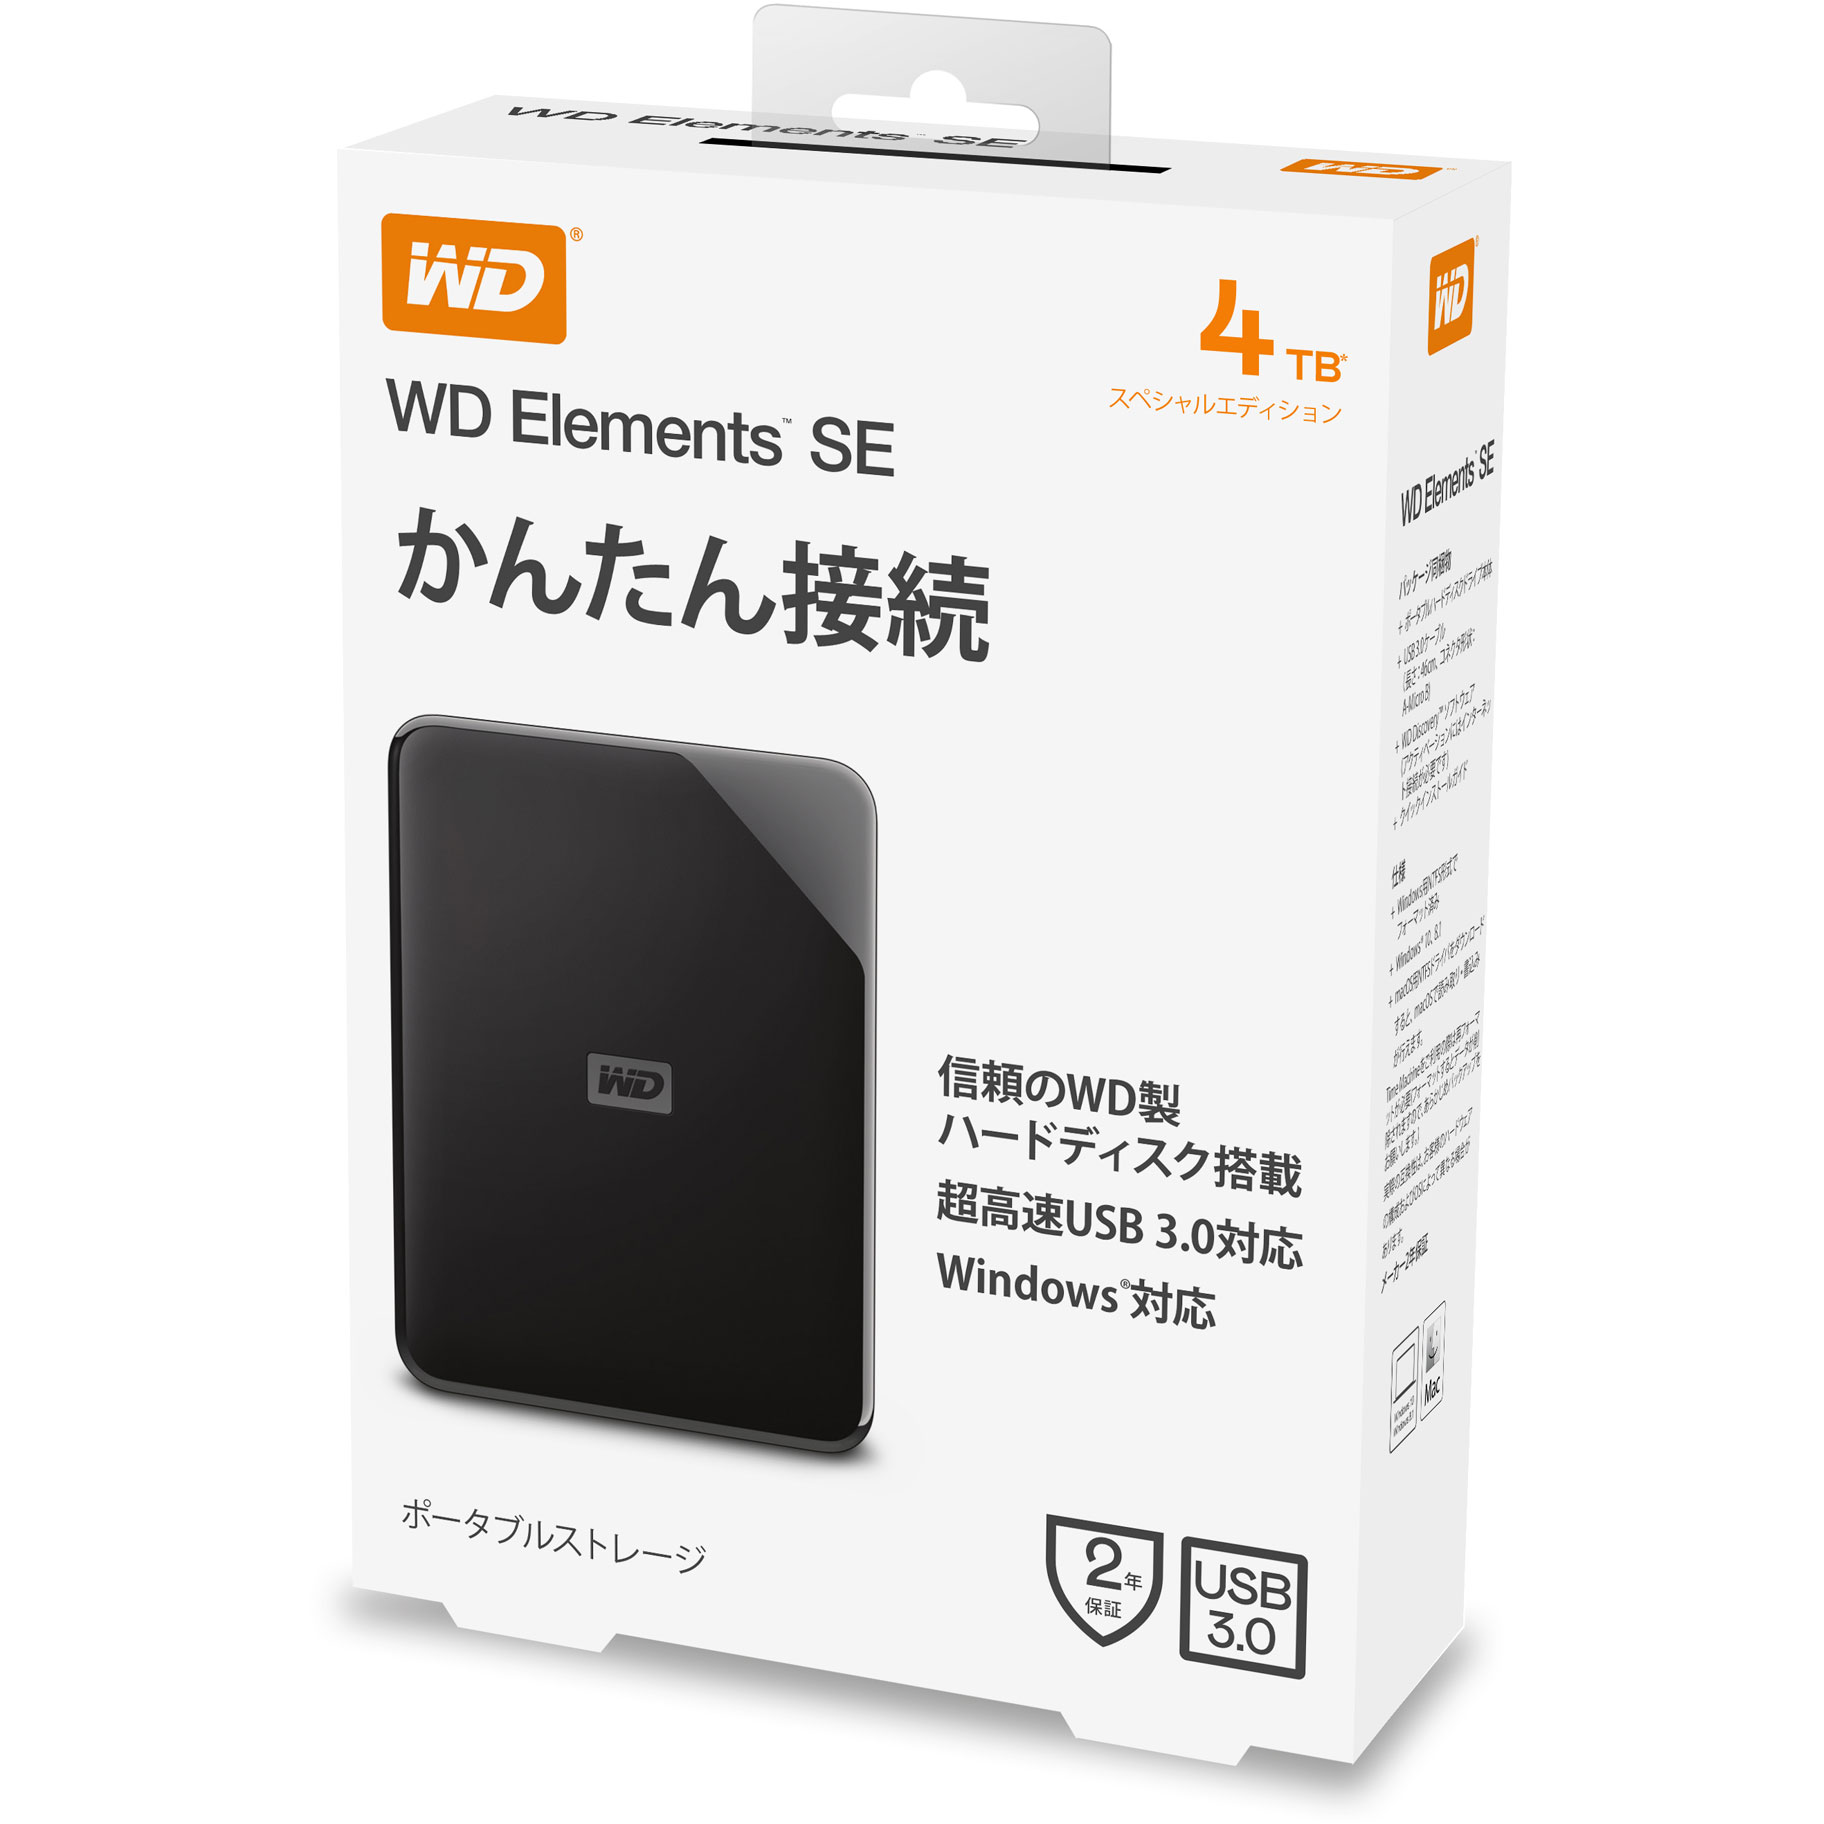 WDBJRT0040BBK-JESE 外付けHDD USB-A接続 WD Elements SE Portable ...